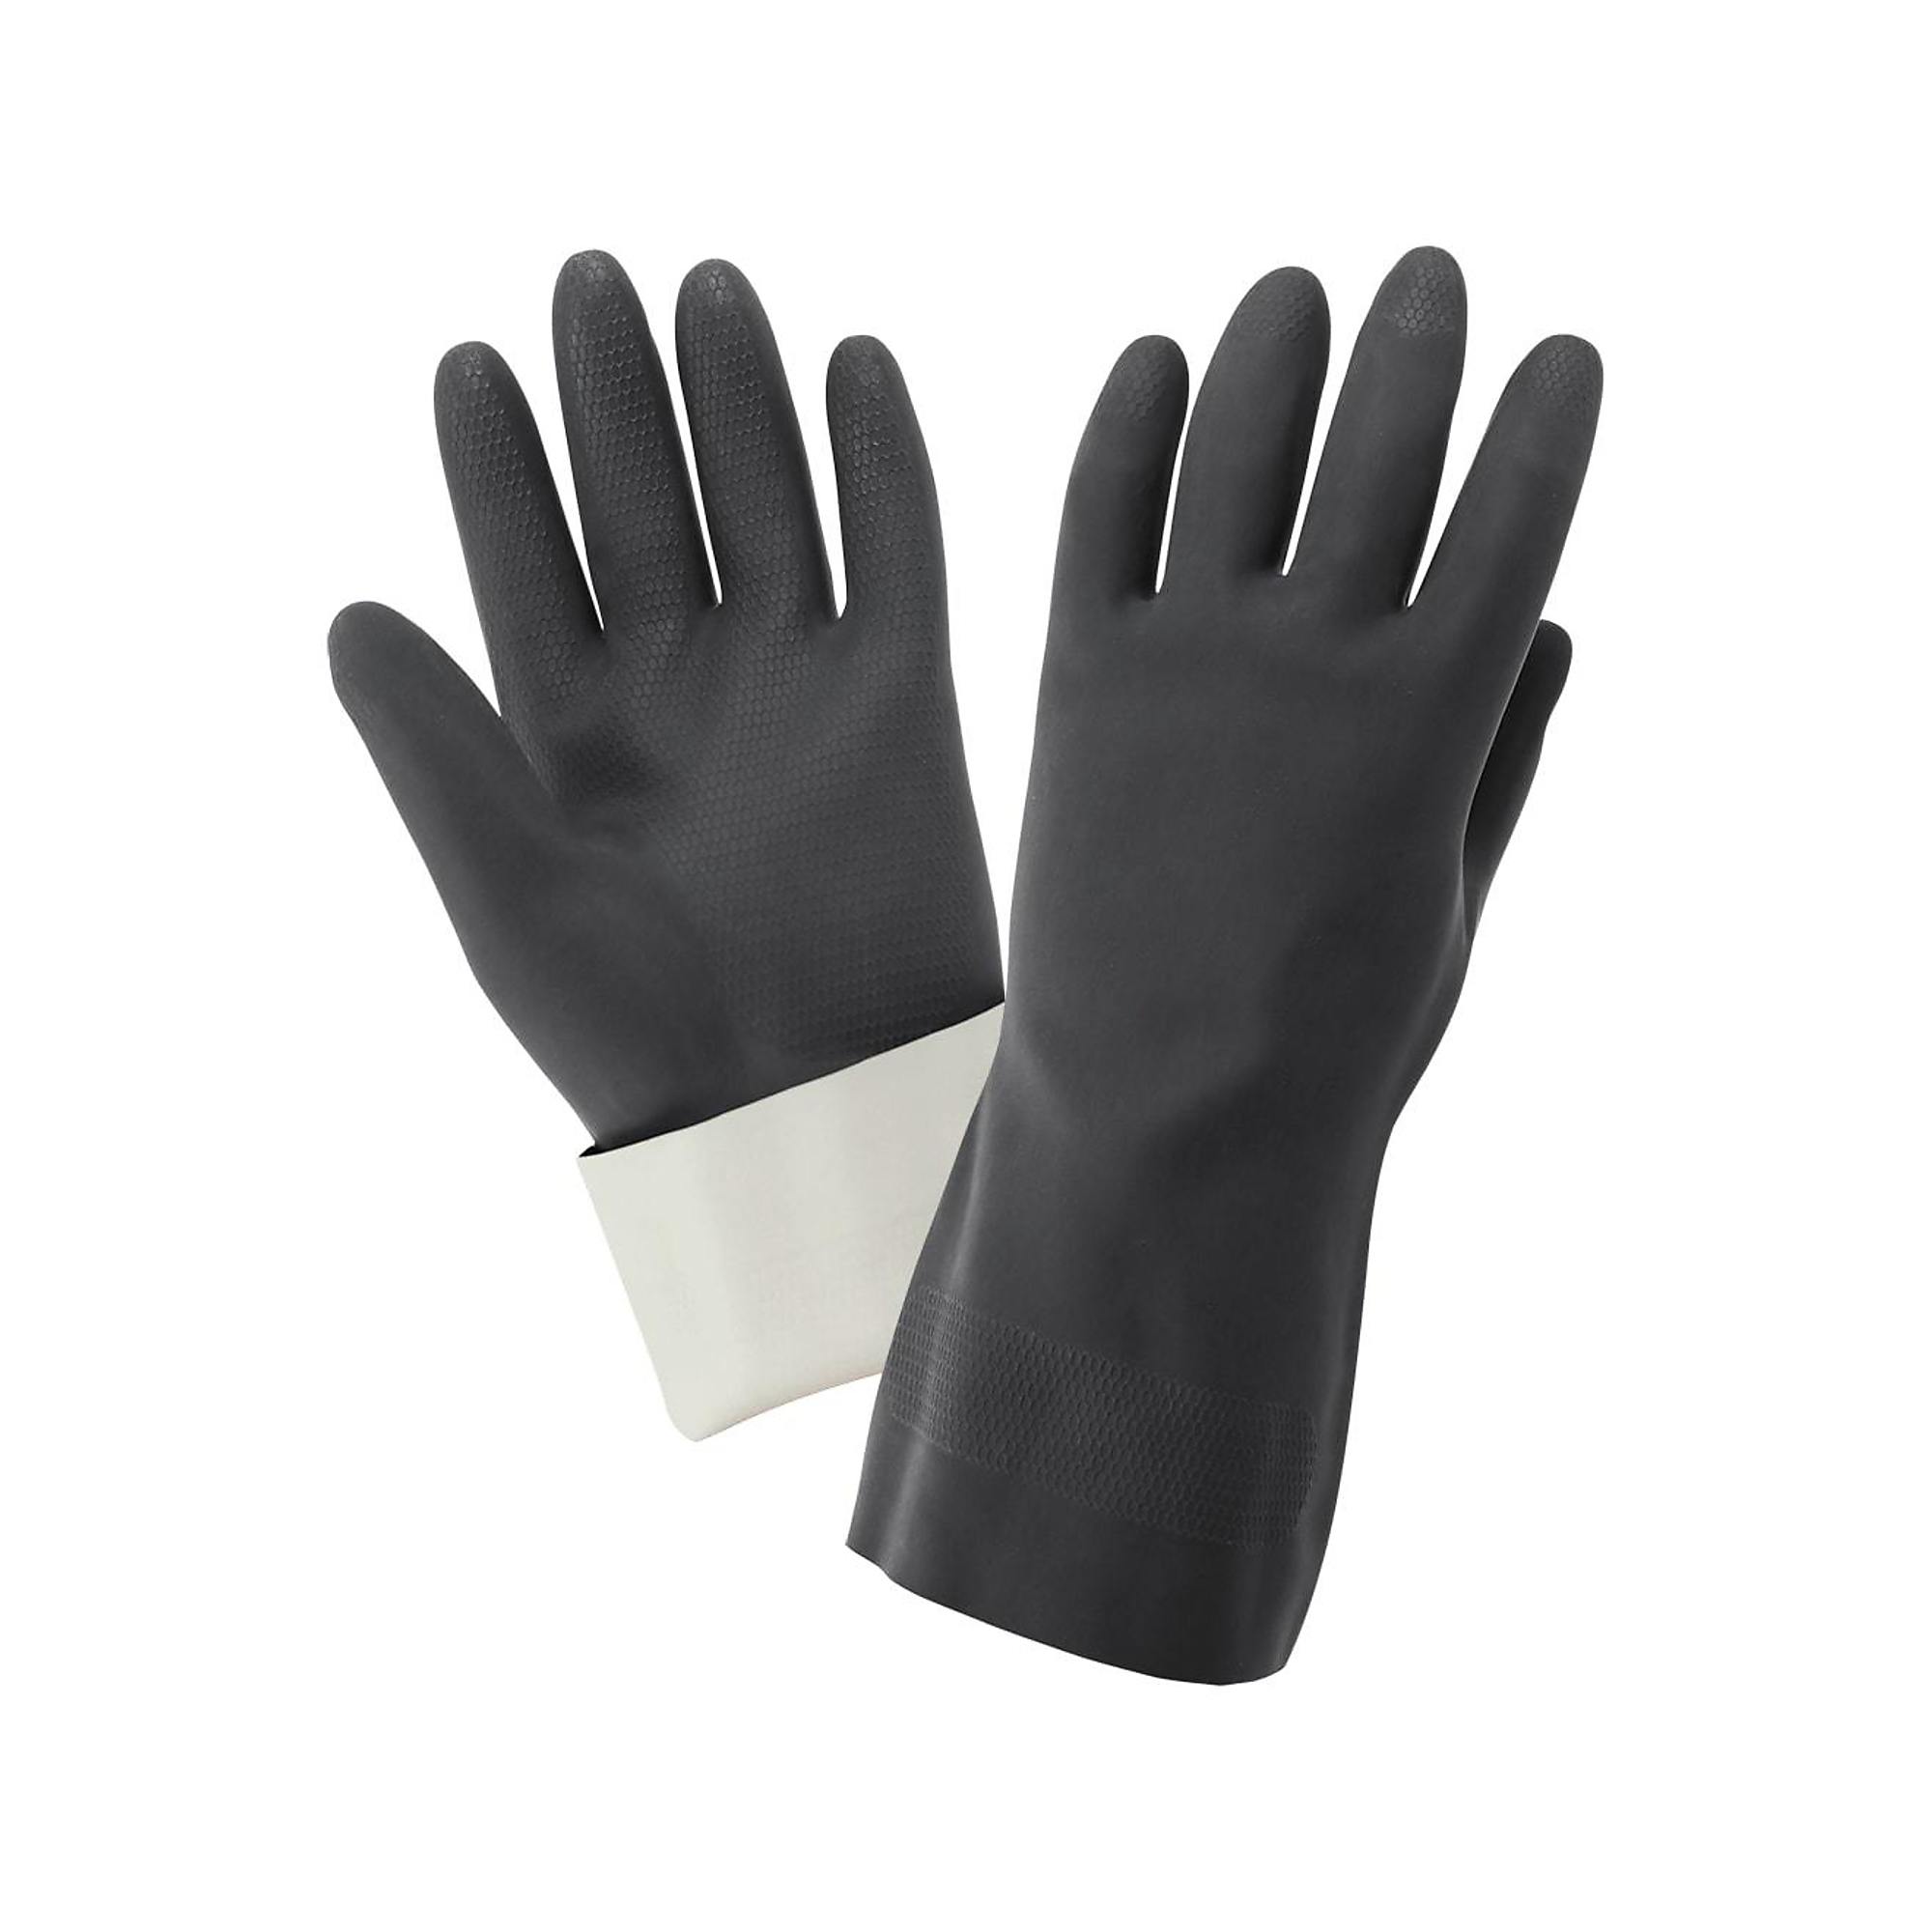 FrogWear, FrogWear Premium Flock 30-Mil Neoprene Gloves - 12 Pairs, Size M, Color Black, Included (qty.) 12 Model 230F-8(M)